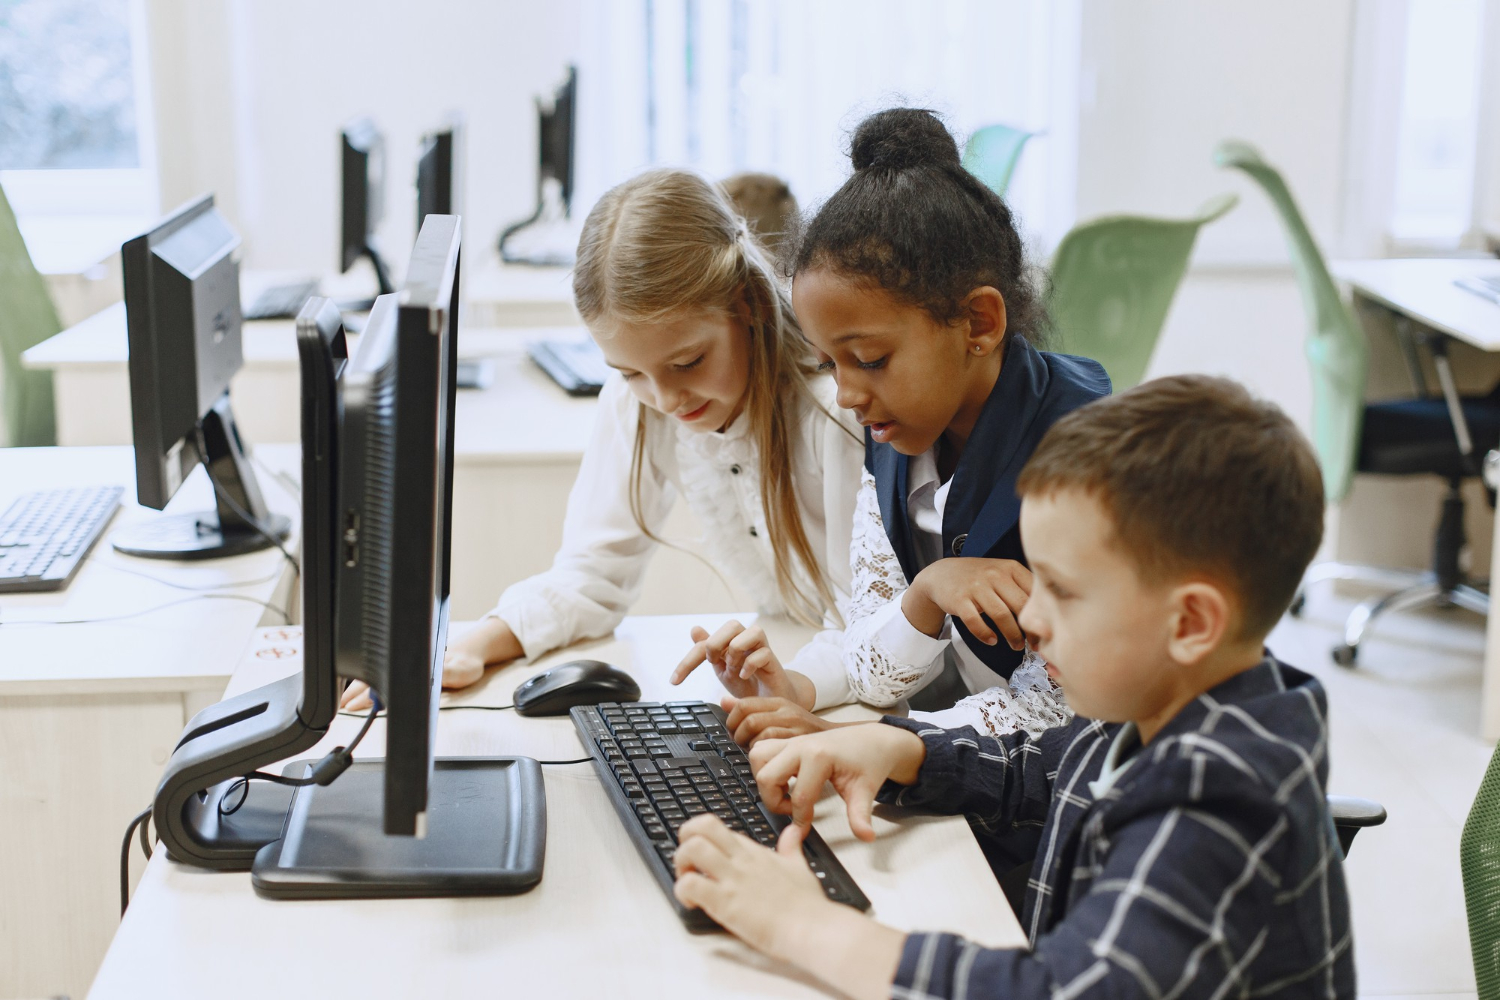 Image of kids at a computer.